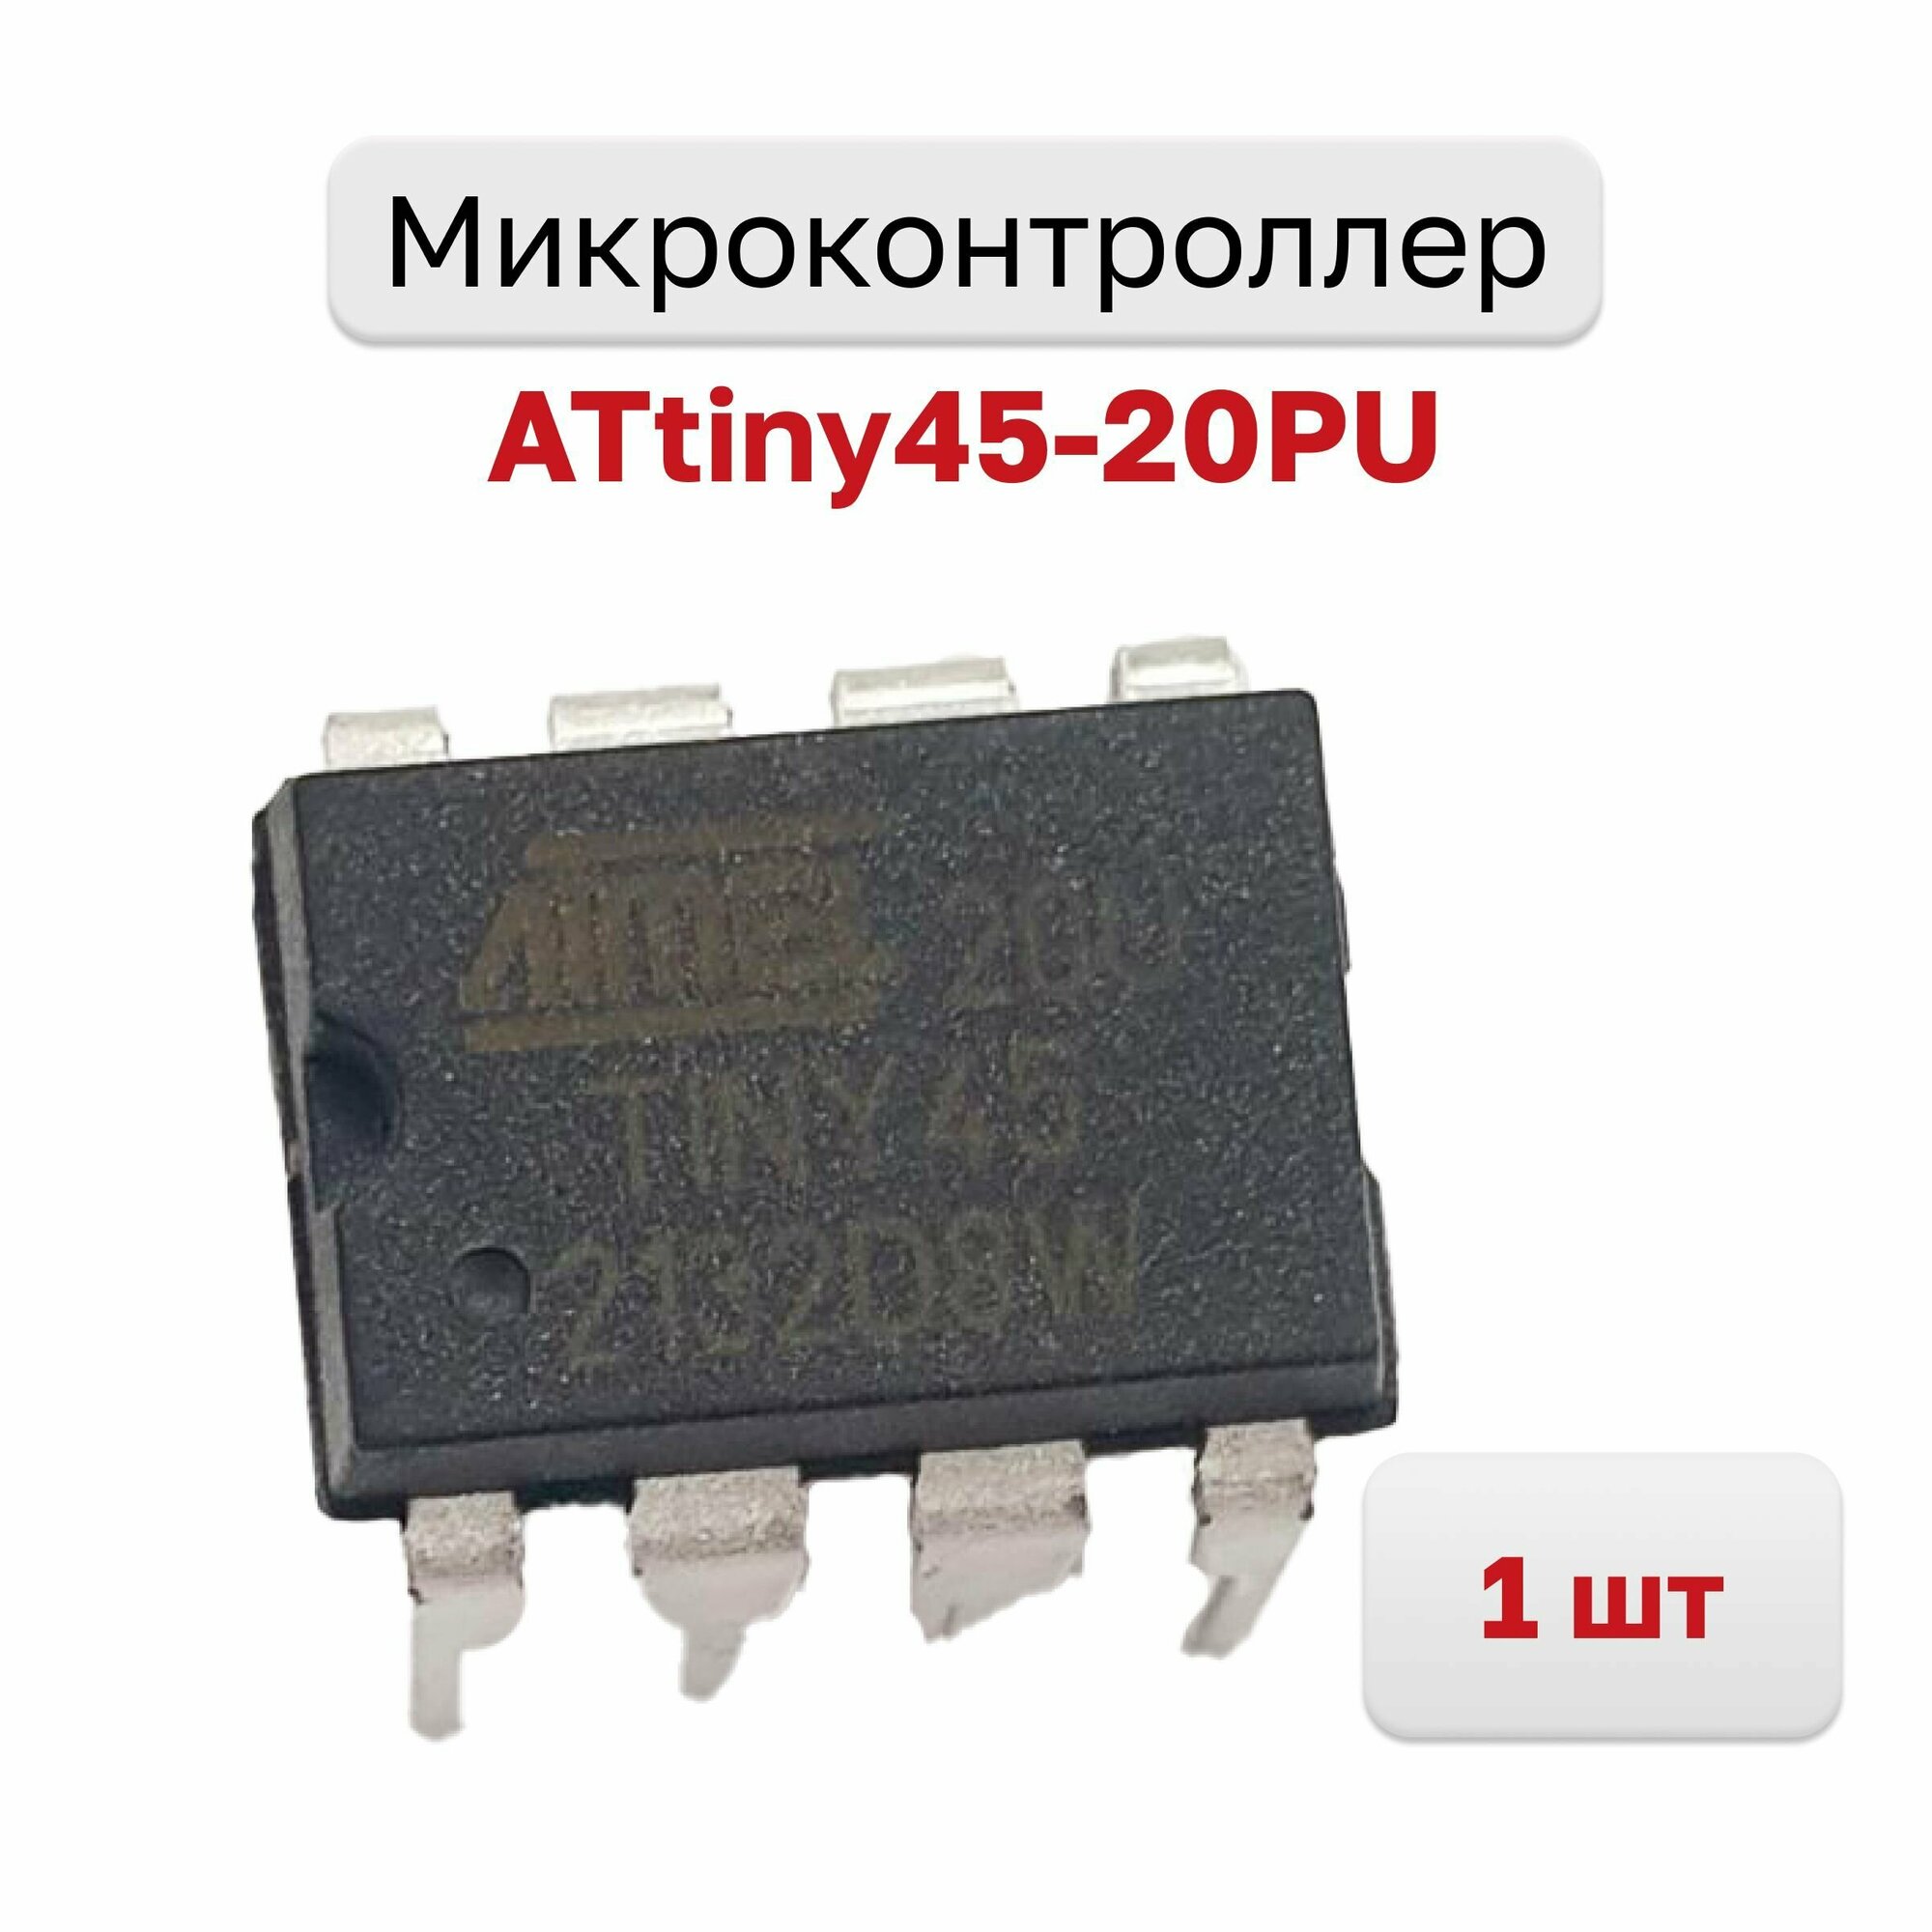 ATtiny45-20PU, Микроконтроллер 8-Бит, 1 шт.